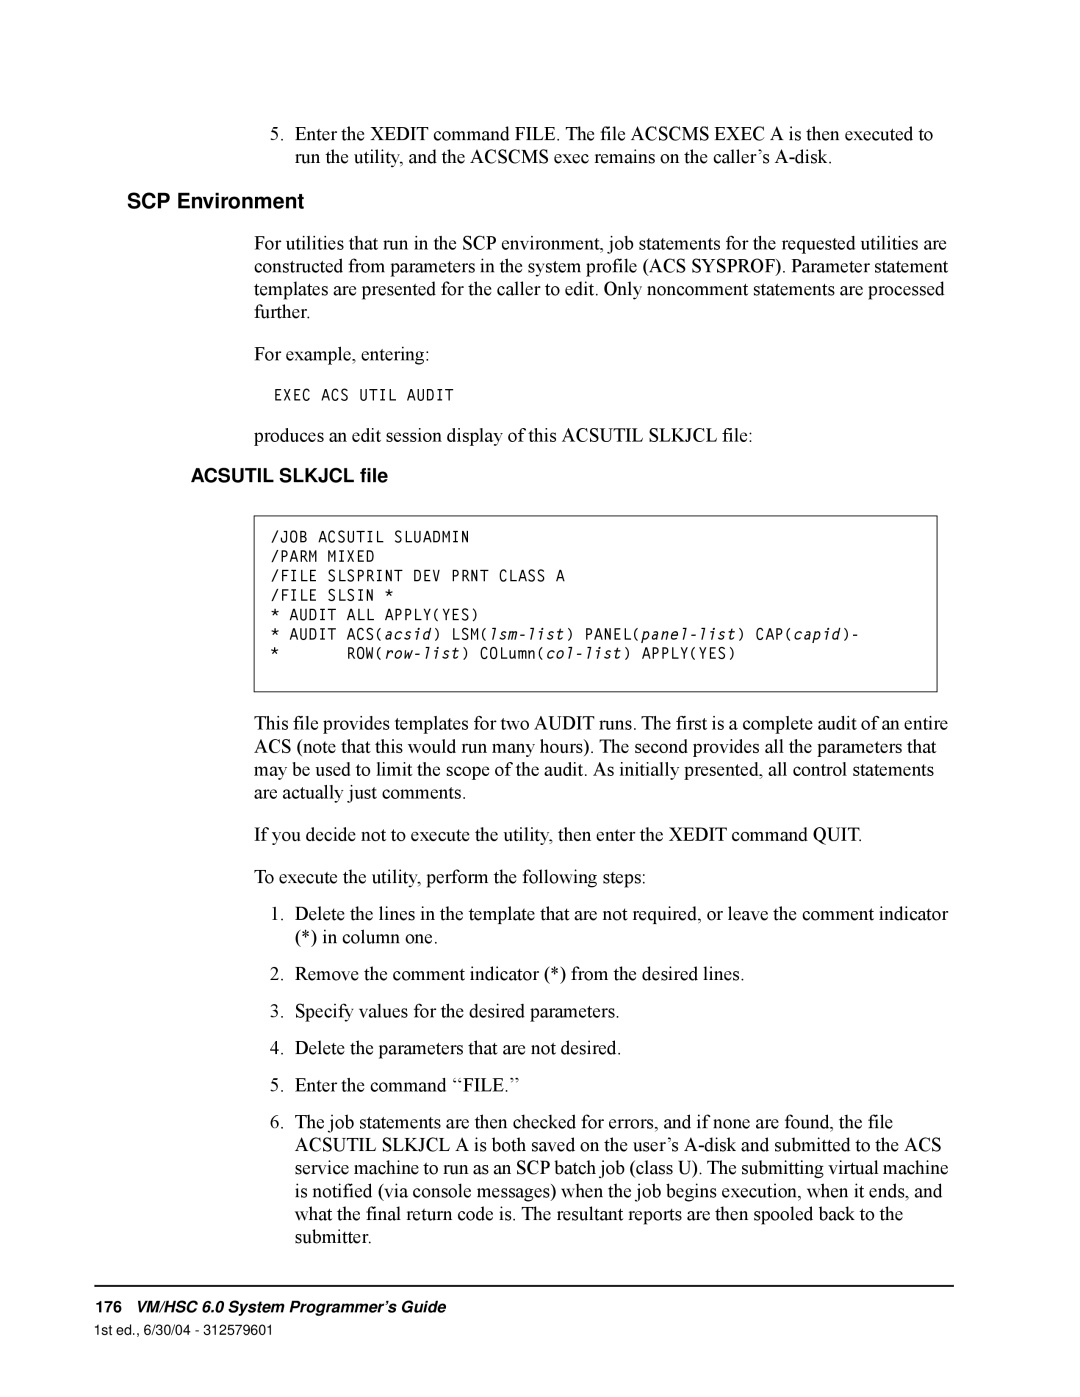 StorageTek 6 manual SCP Environment, ACSUTIL SLKJCL file 